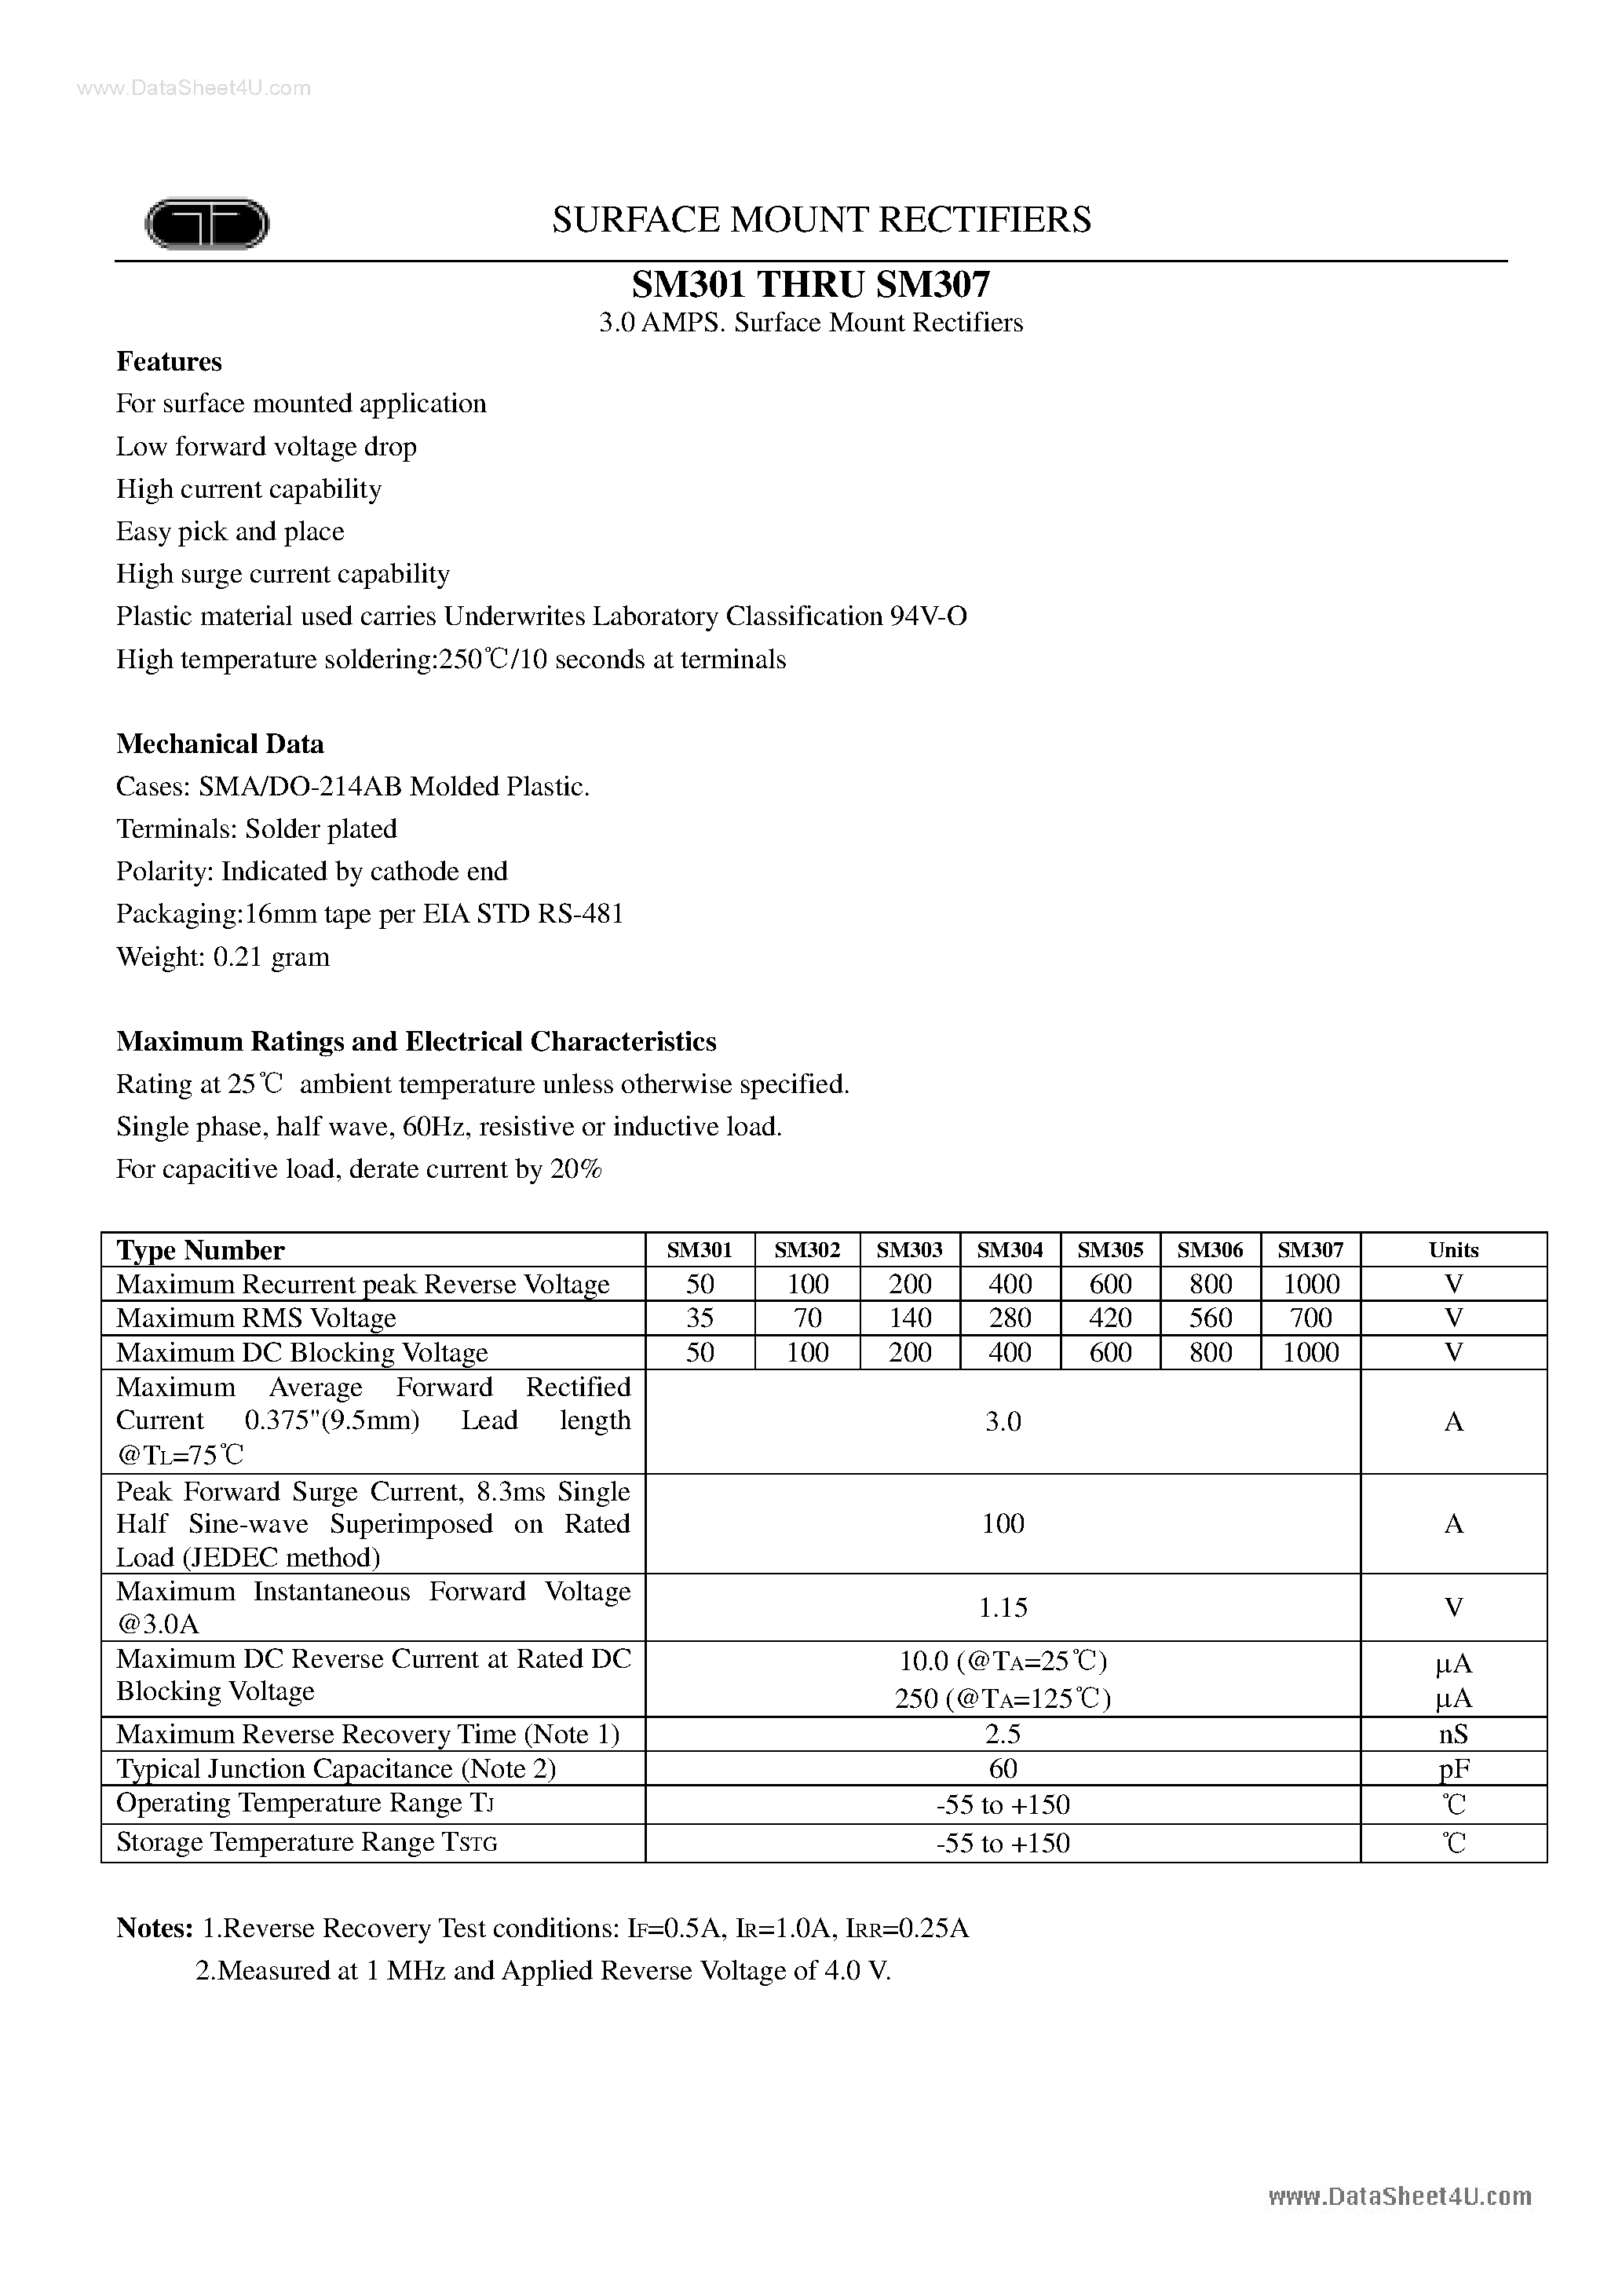 Datasheet SM301 - (SM301 - SM307) Surface Mount Rectifiers page 1